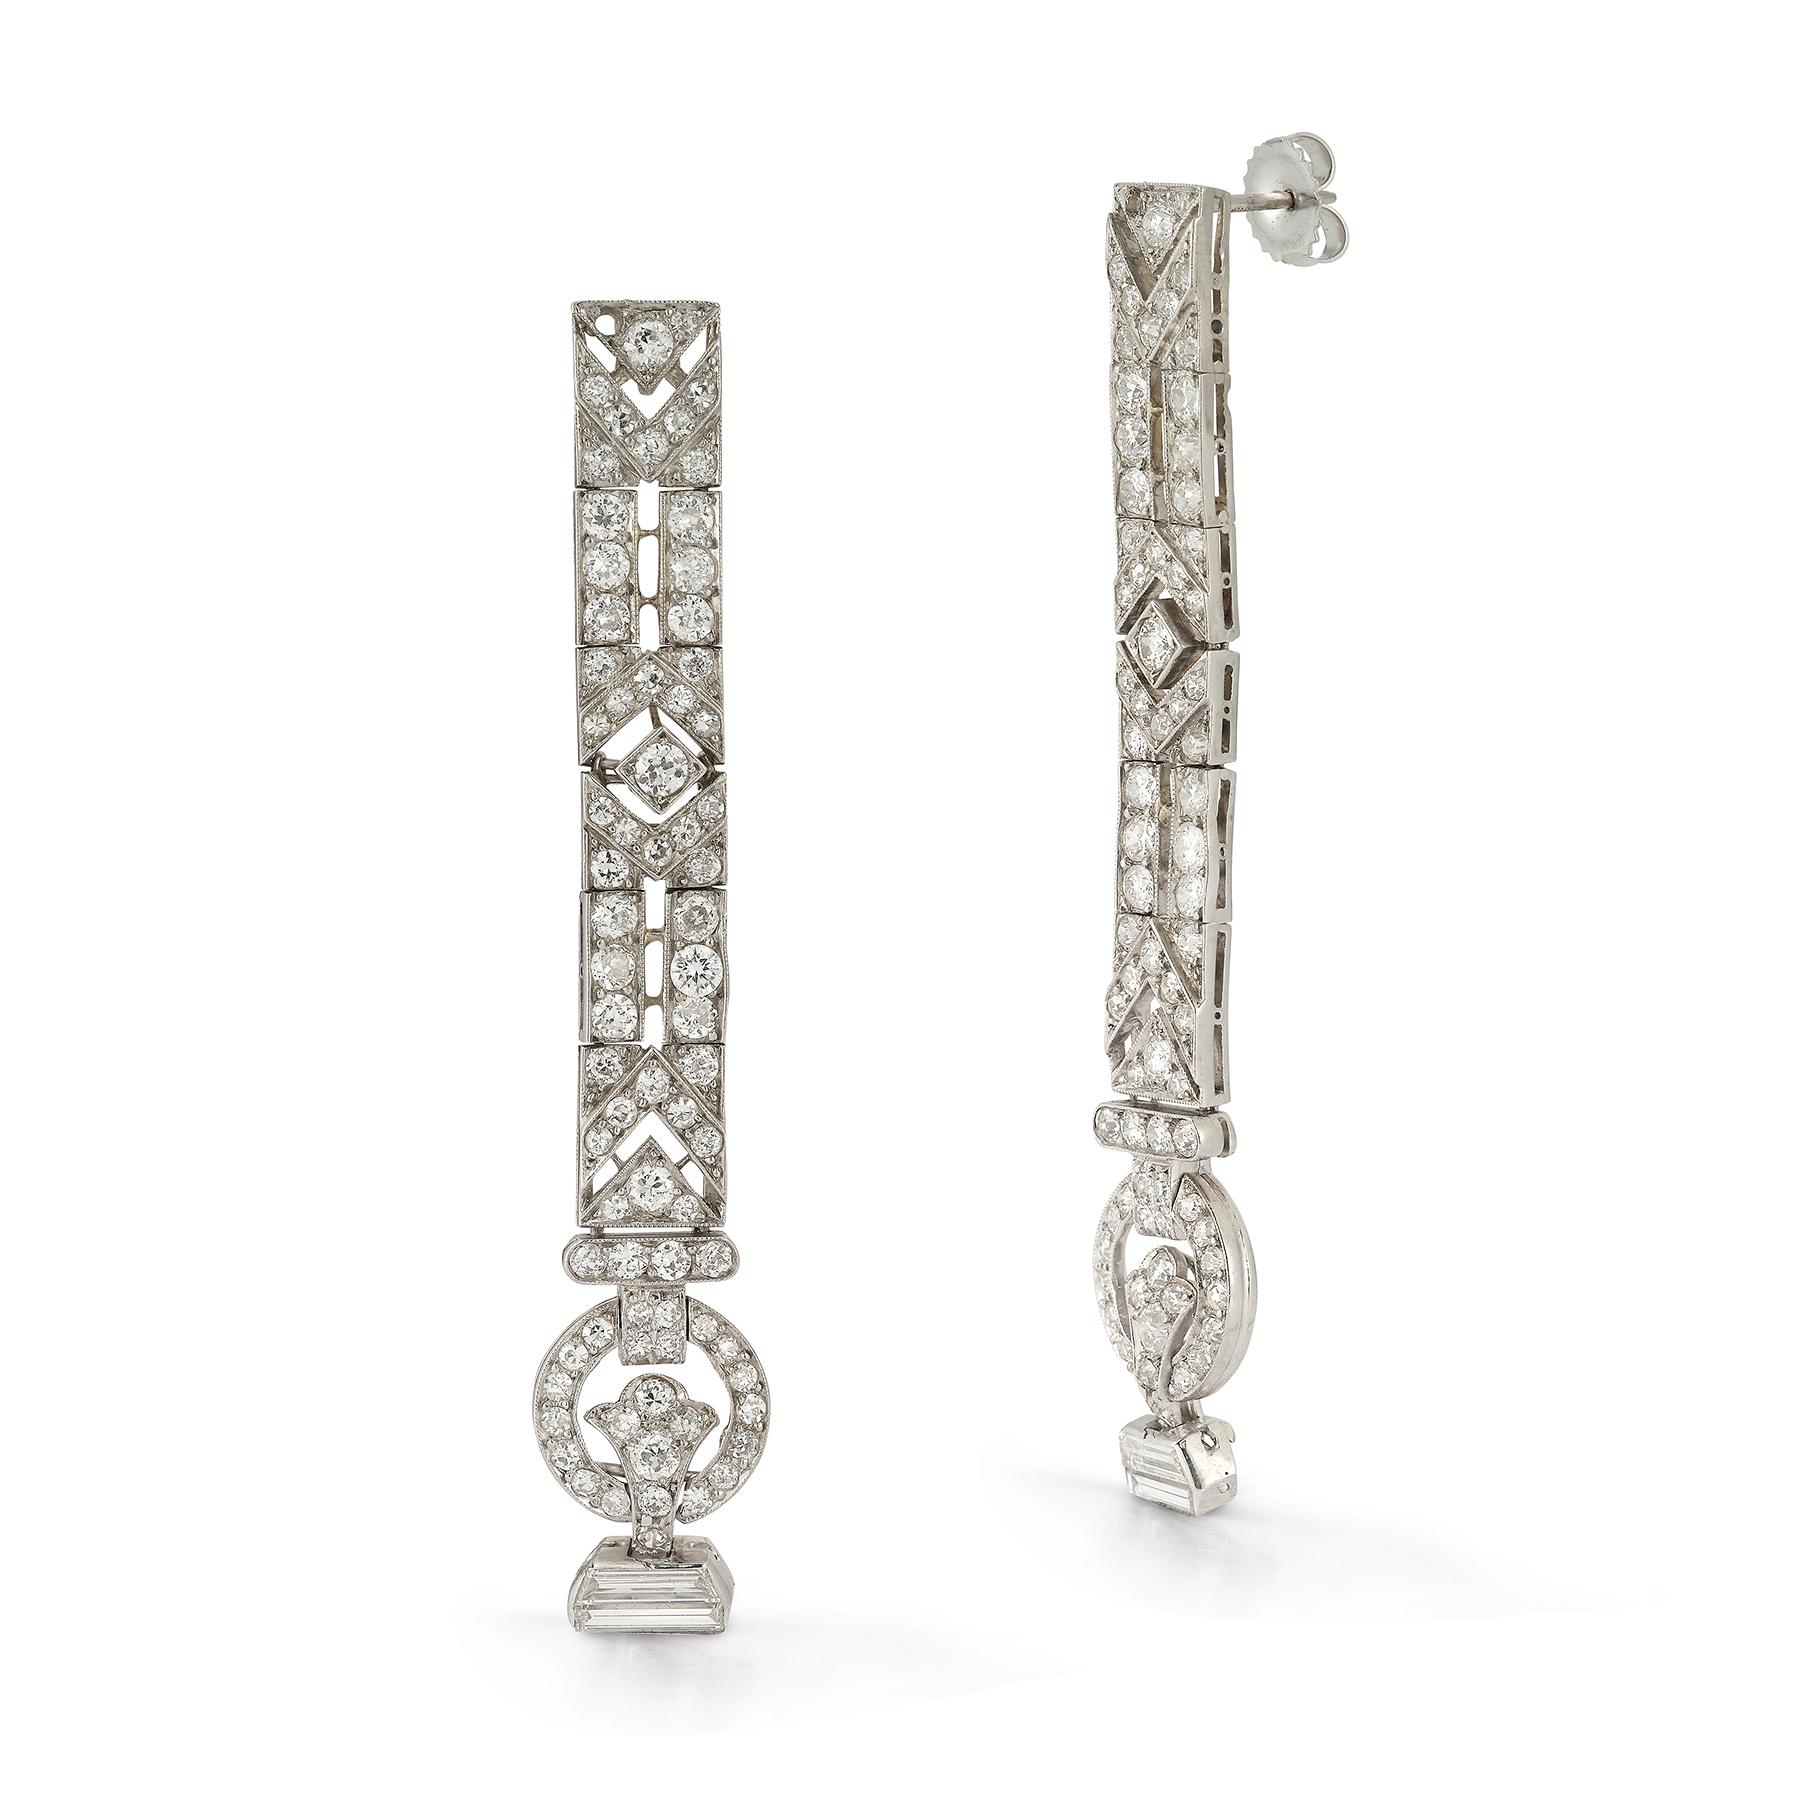 Art Deco Diamond Earrings 

Approximately 5.50 carats of diamonds

Back Type: Push Back

Measurements: 2.75